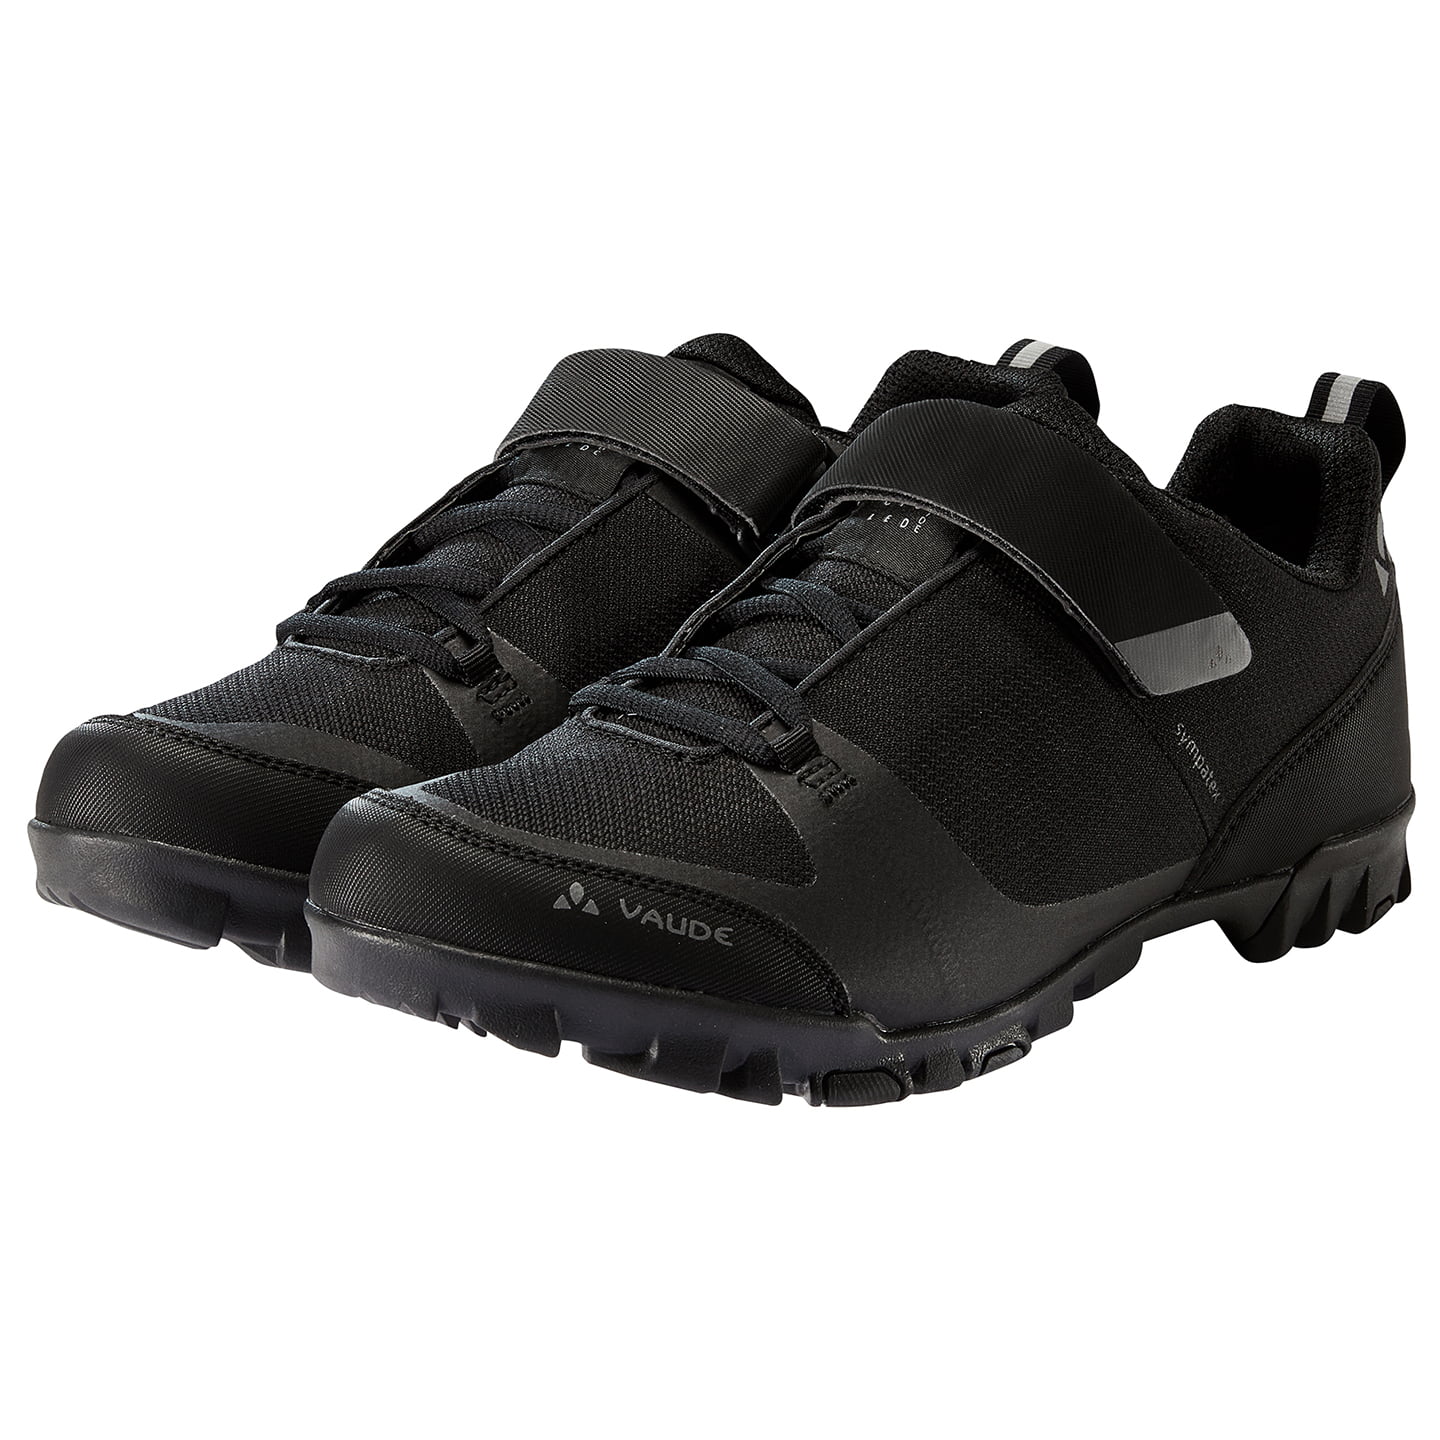 VAUDE MTB-schoenen Pavei STX zwart